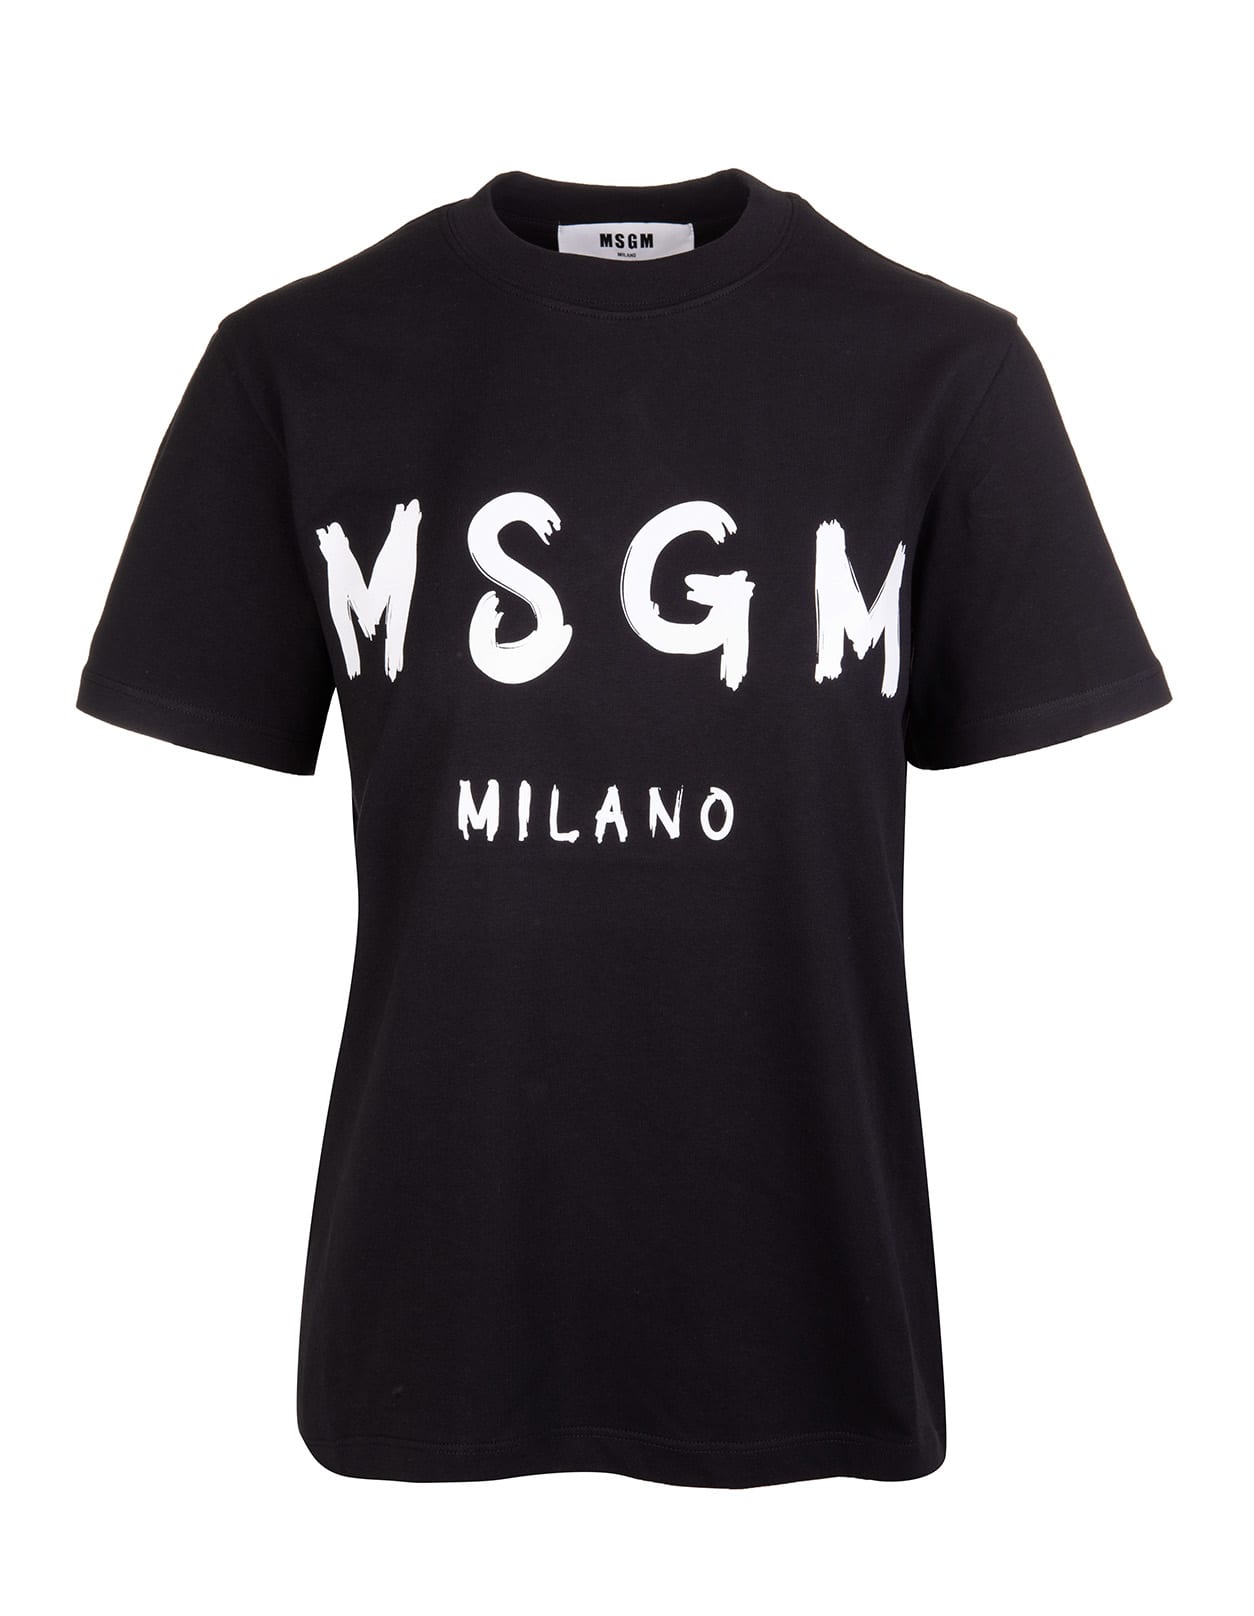 MSGM Woman Black T-shirt With White Logo